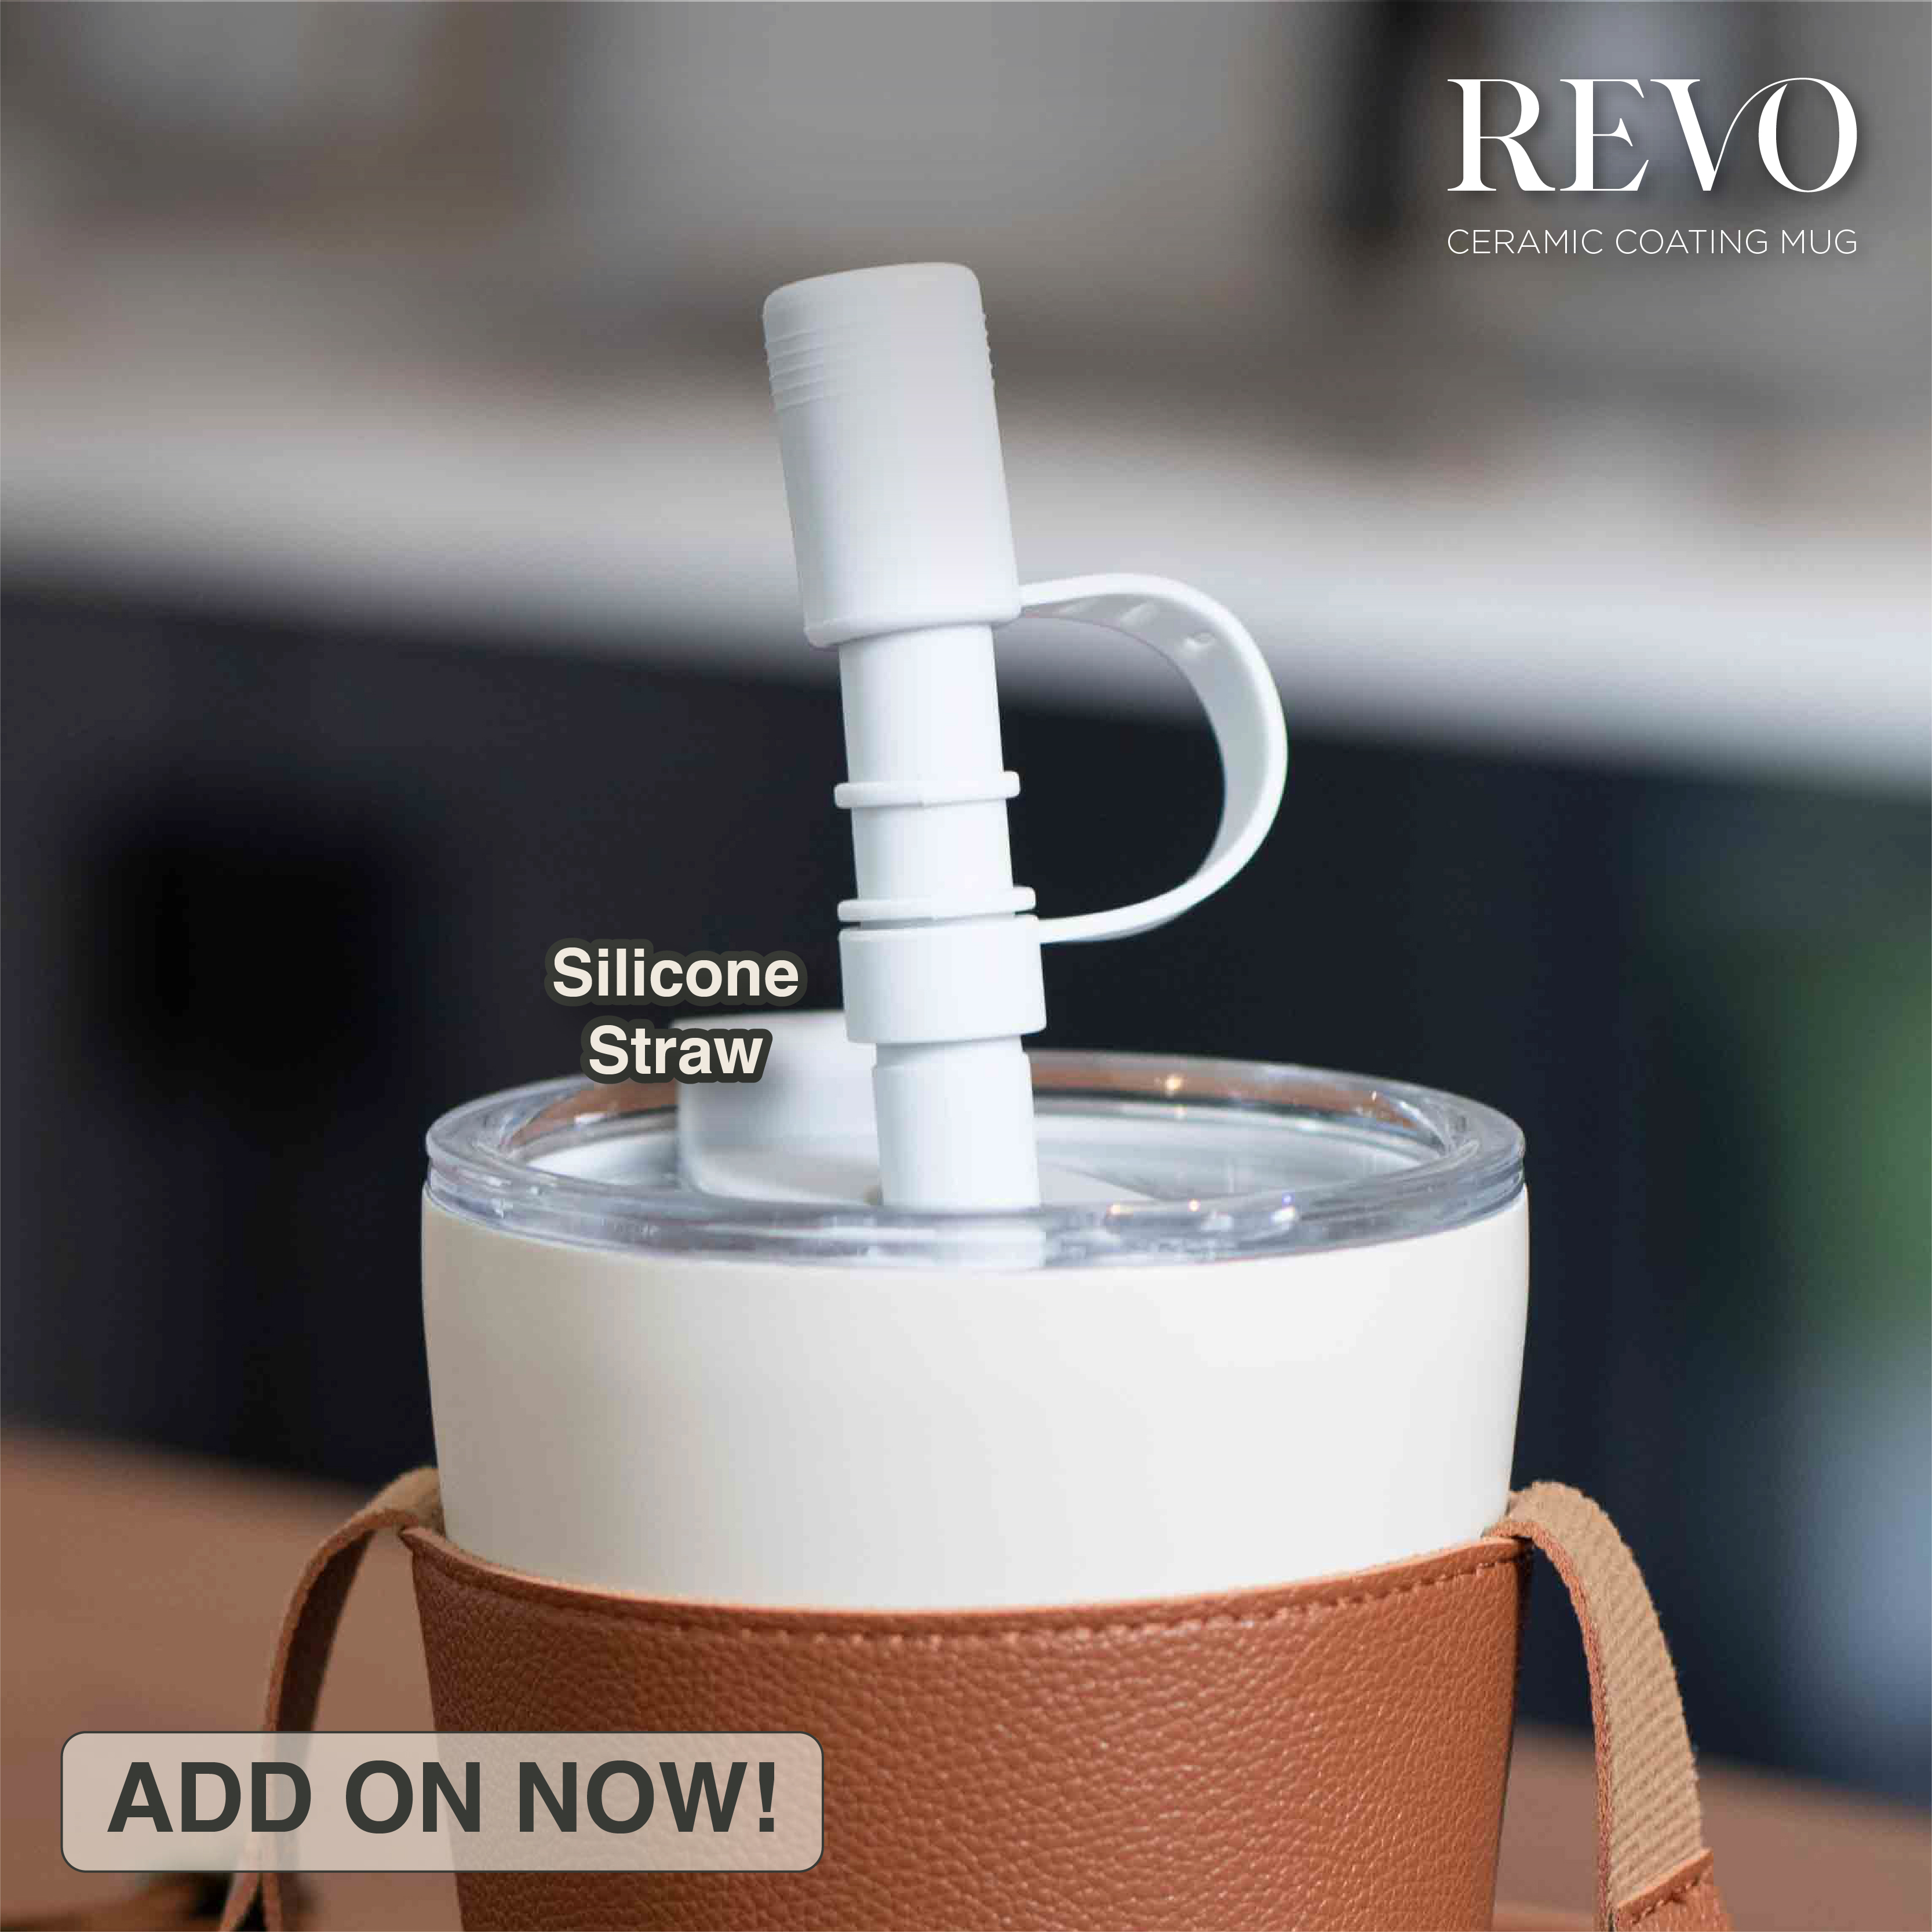 Silicone Straw (for Revo Cup)